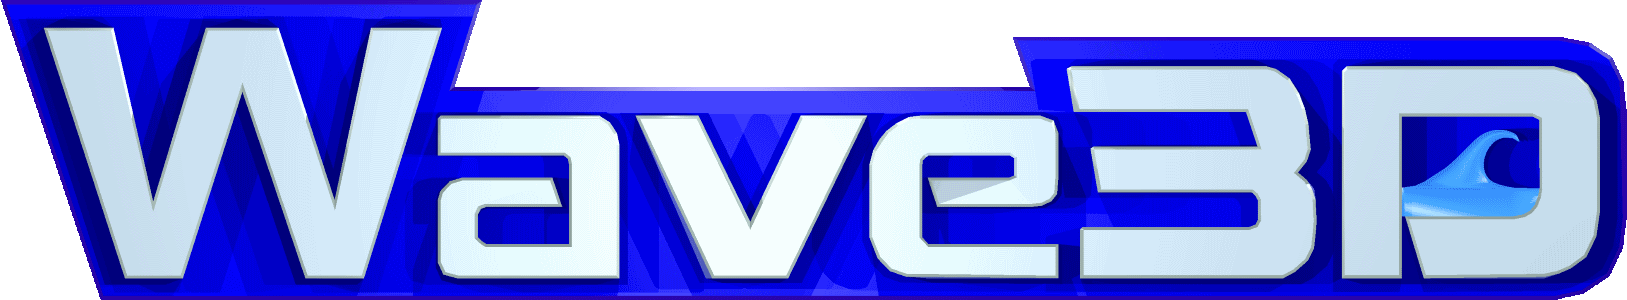 Wave3D Text as Logo